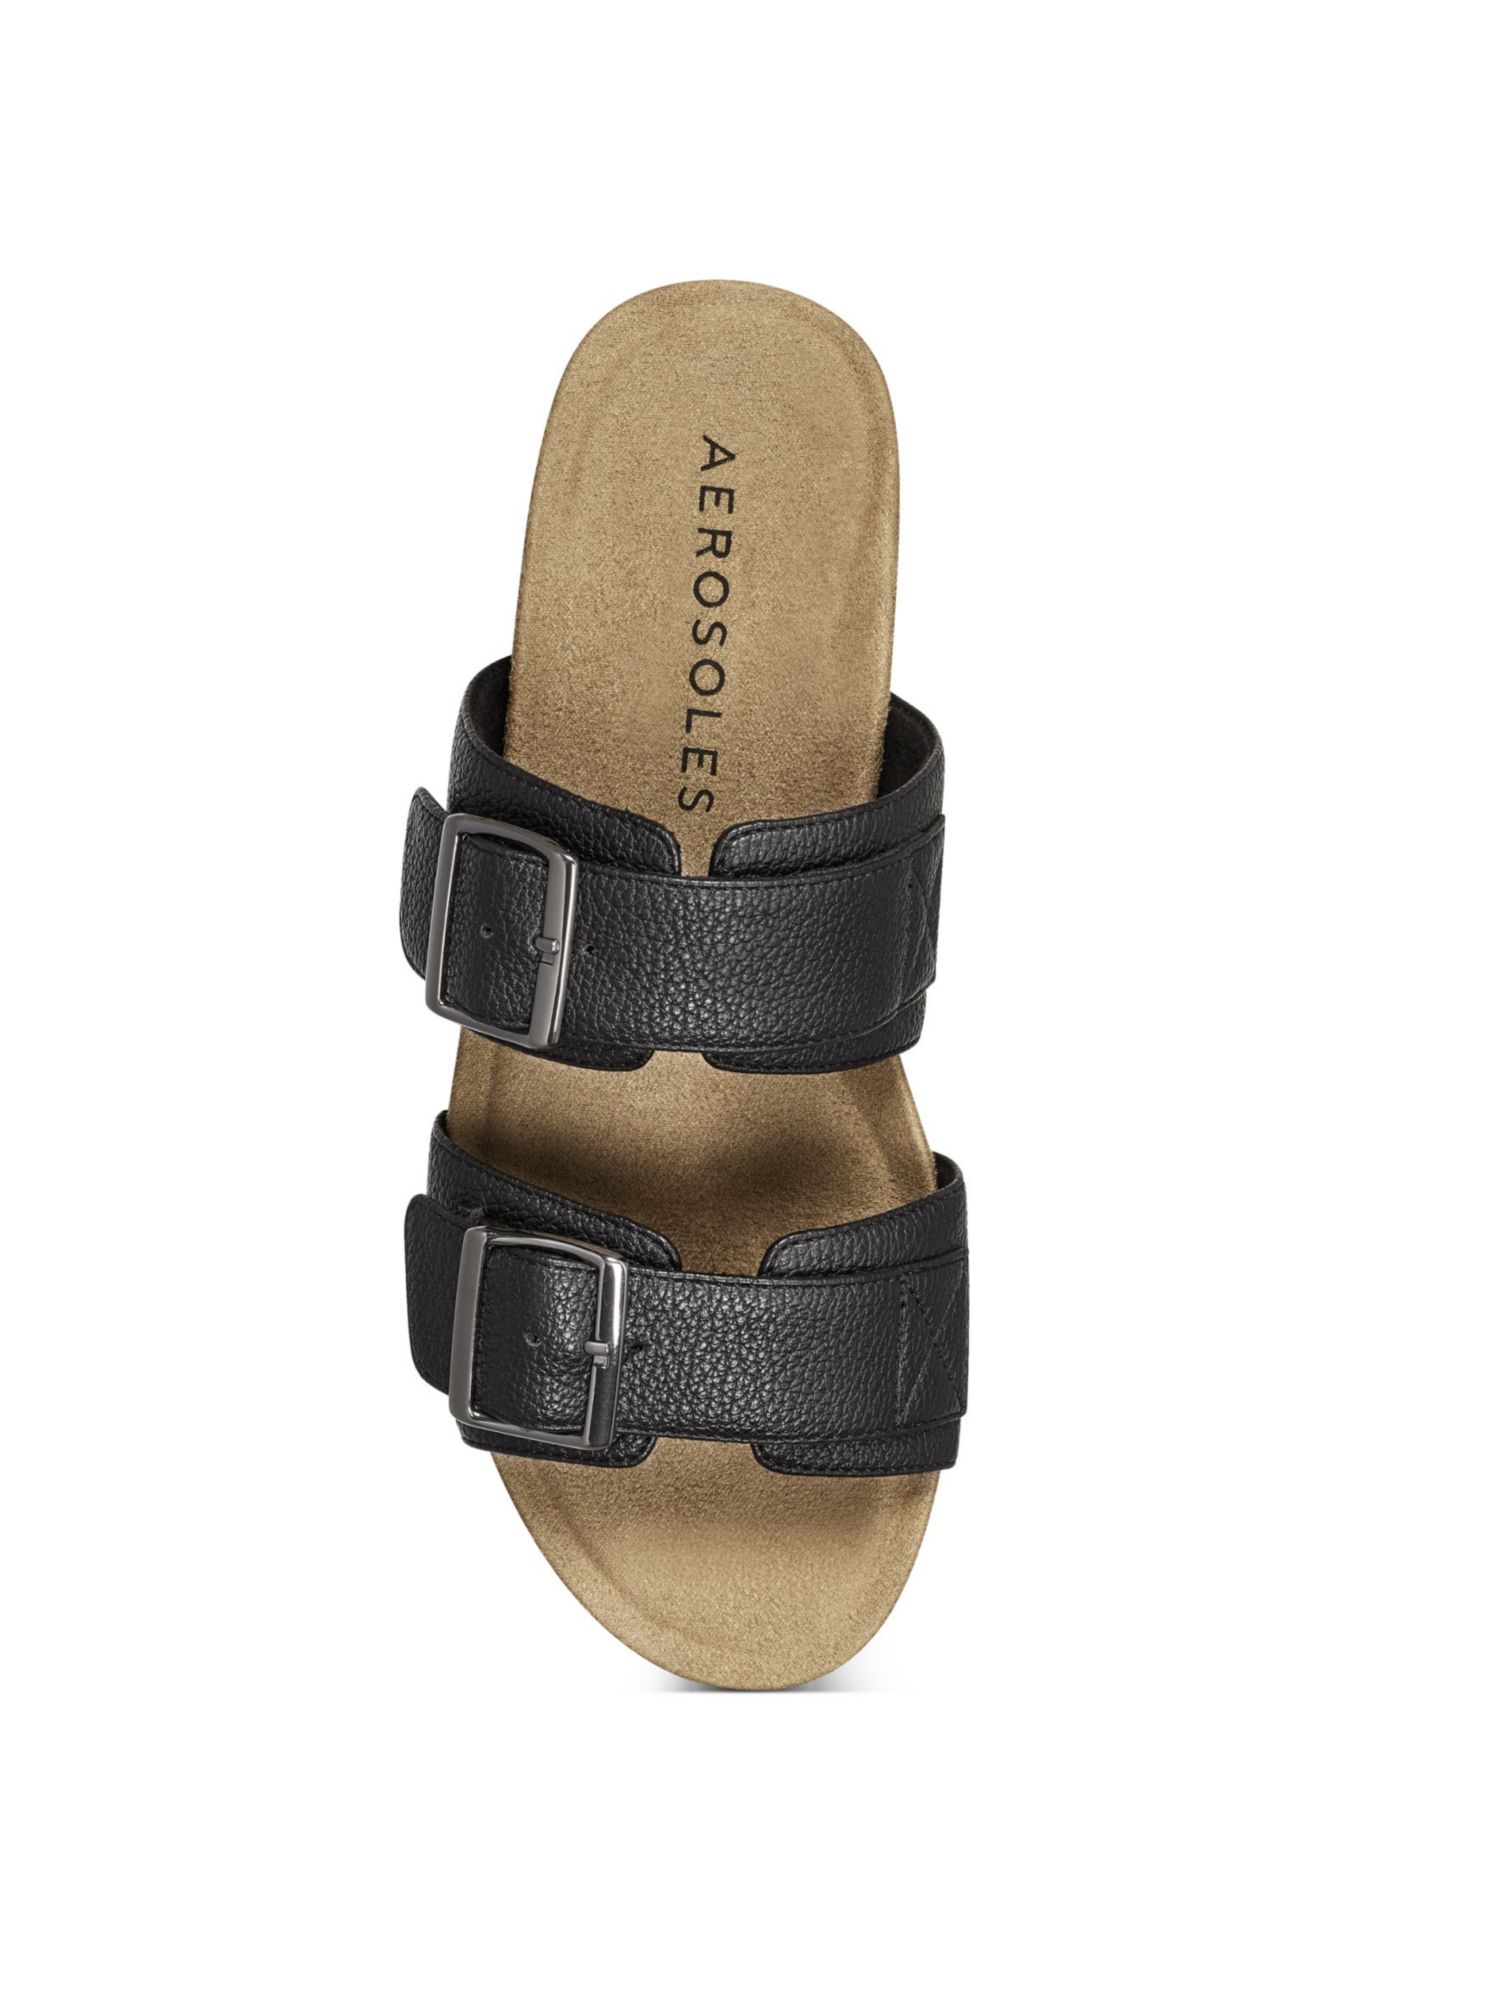 AEROSOLES Womens Black 0.5" Platform Buckle Accent Comfort Hamden Round Toe Wedge Slip On Slide Sandals Shoes 9.5 M